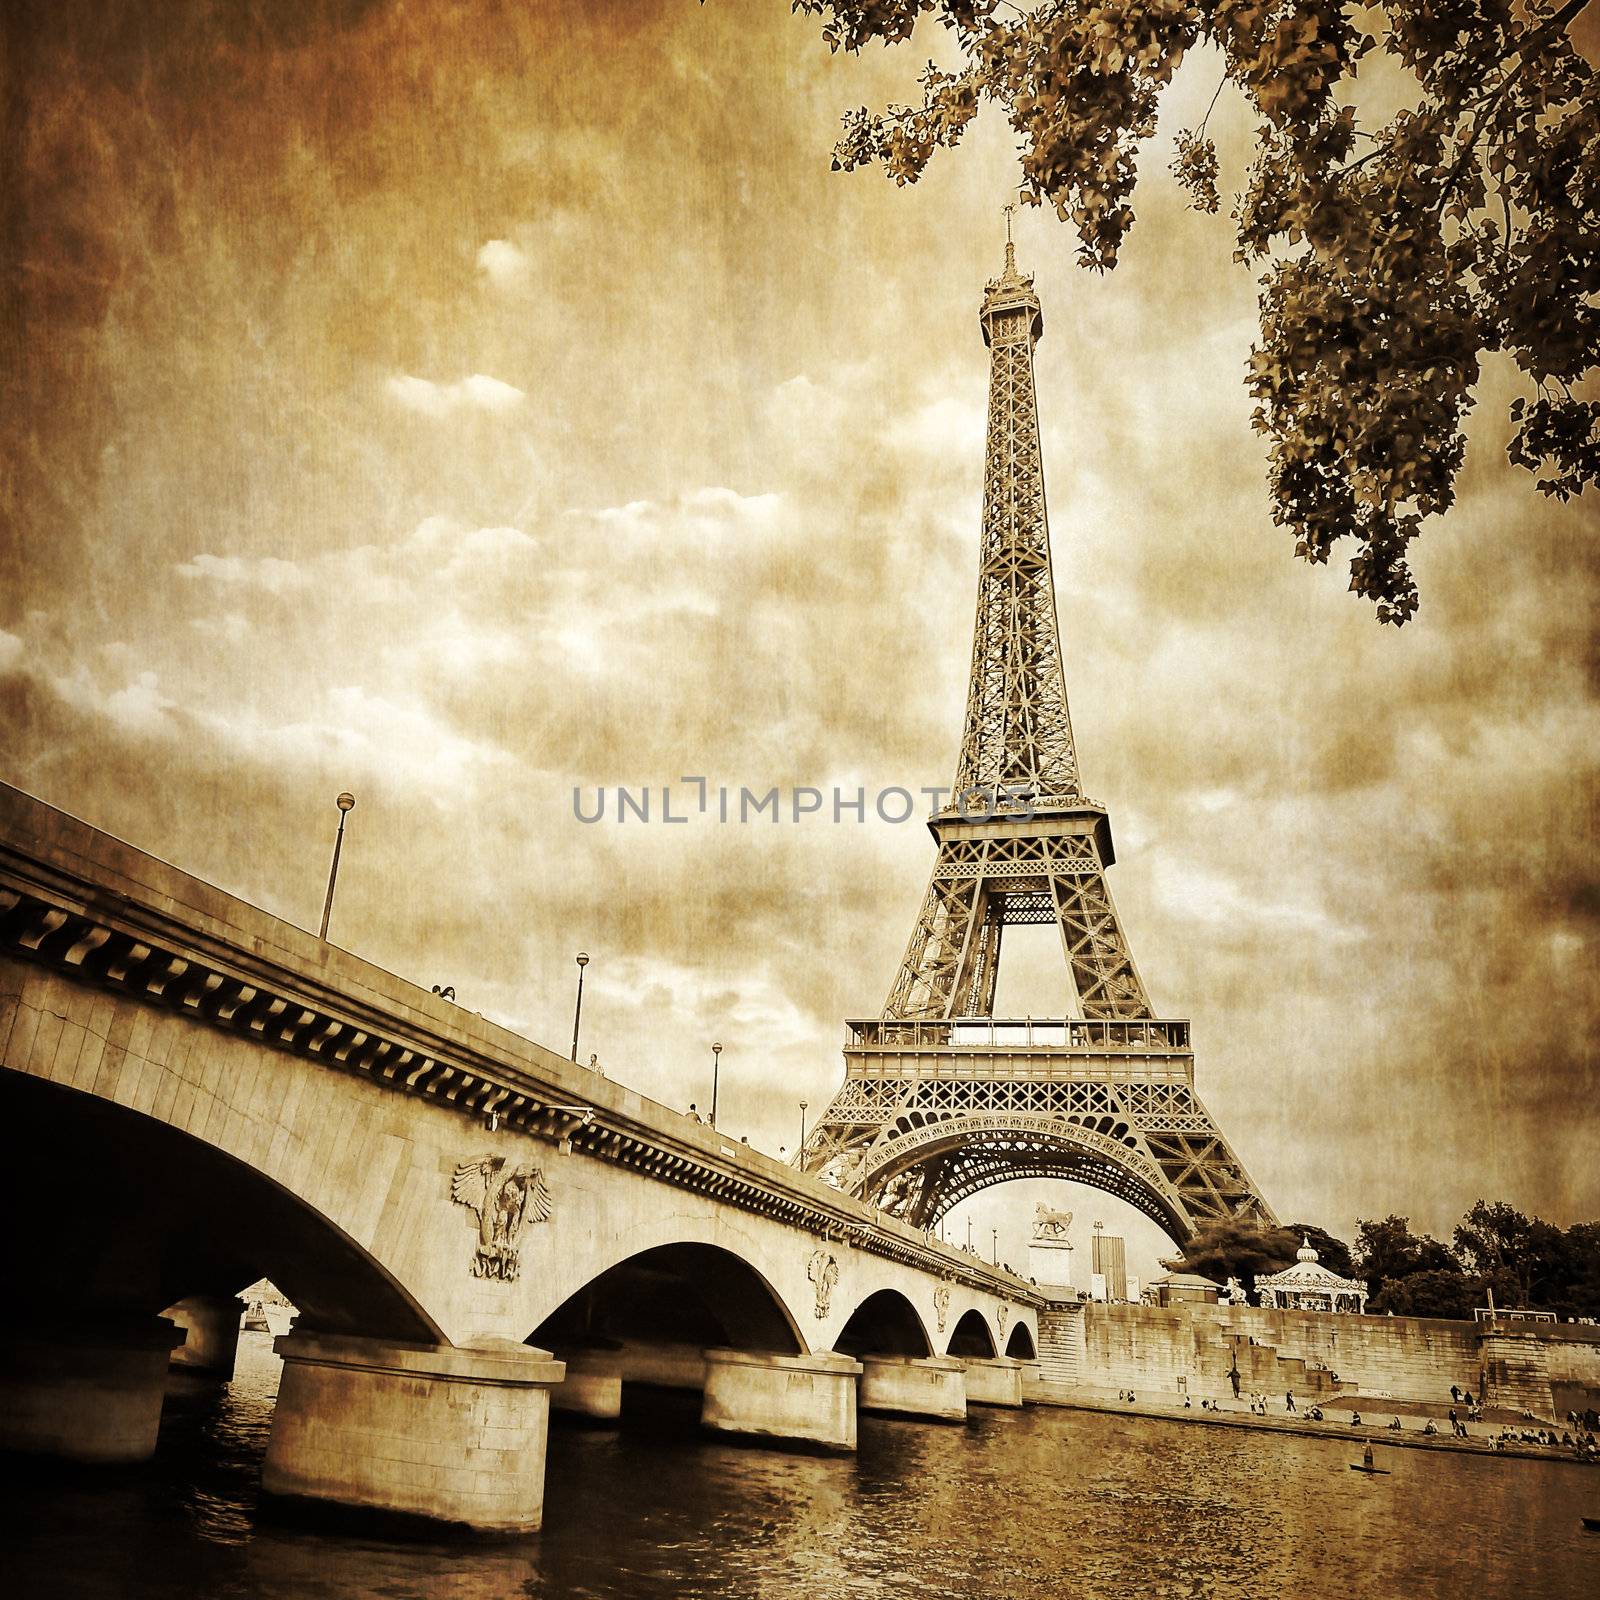 Eiffel tower monochrome vintage view with bridge by martinm303